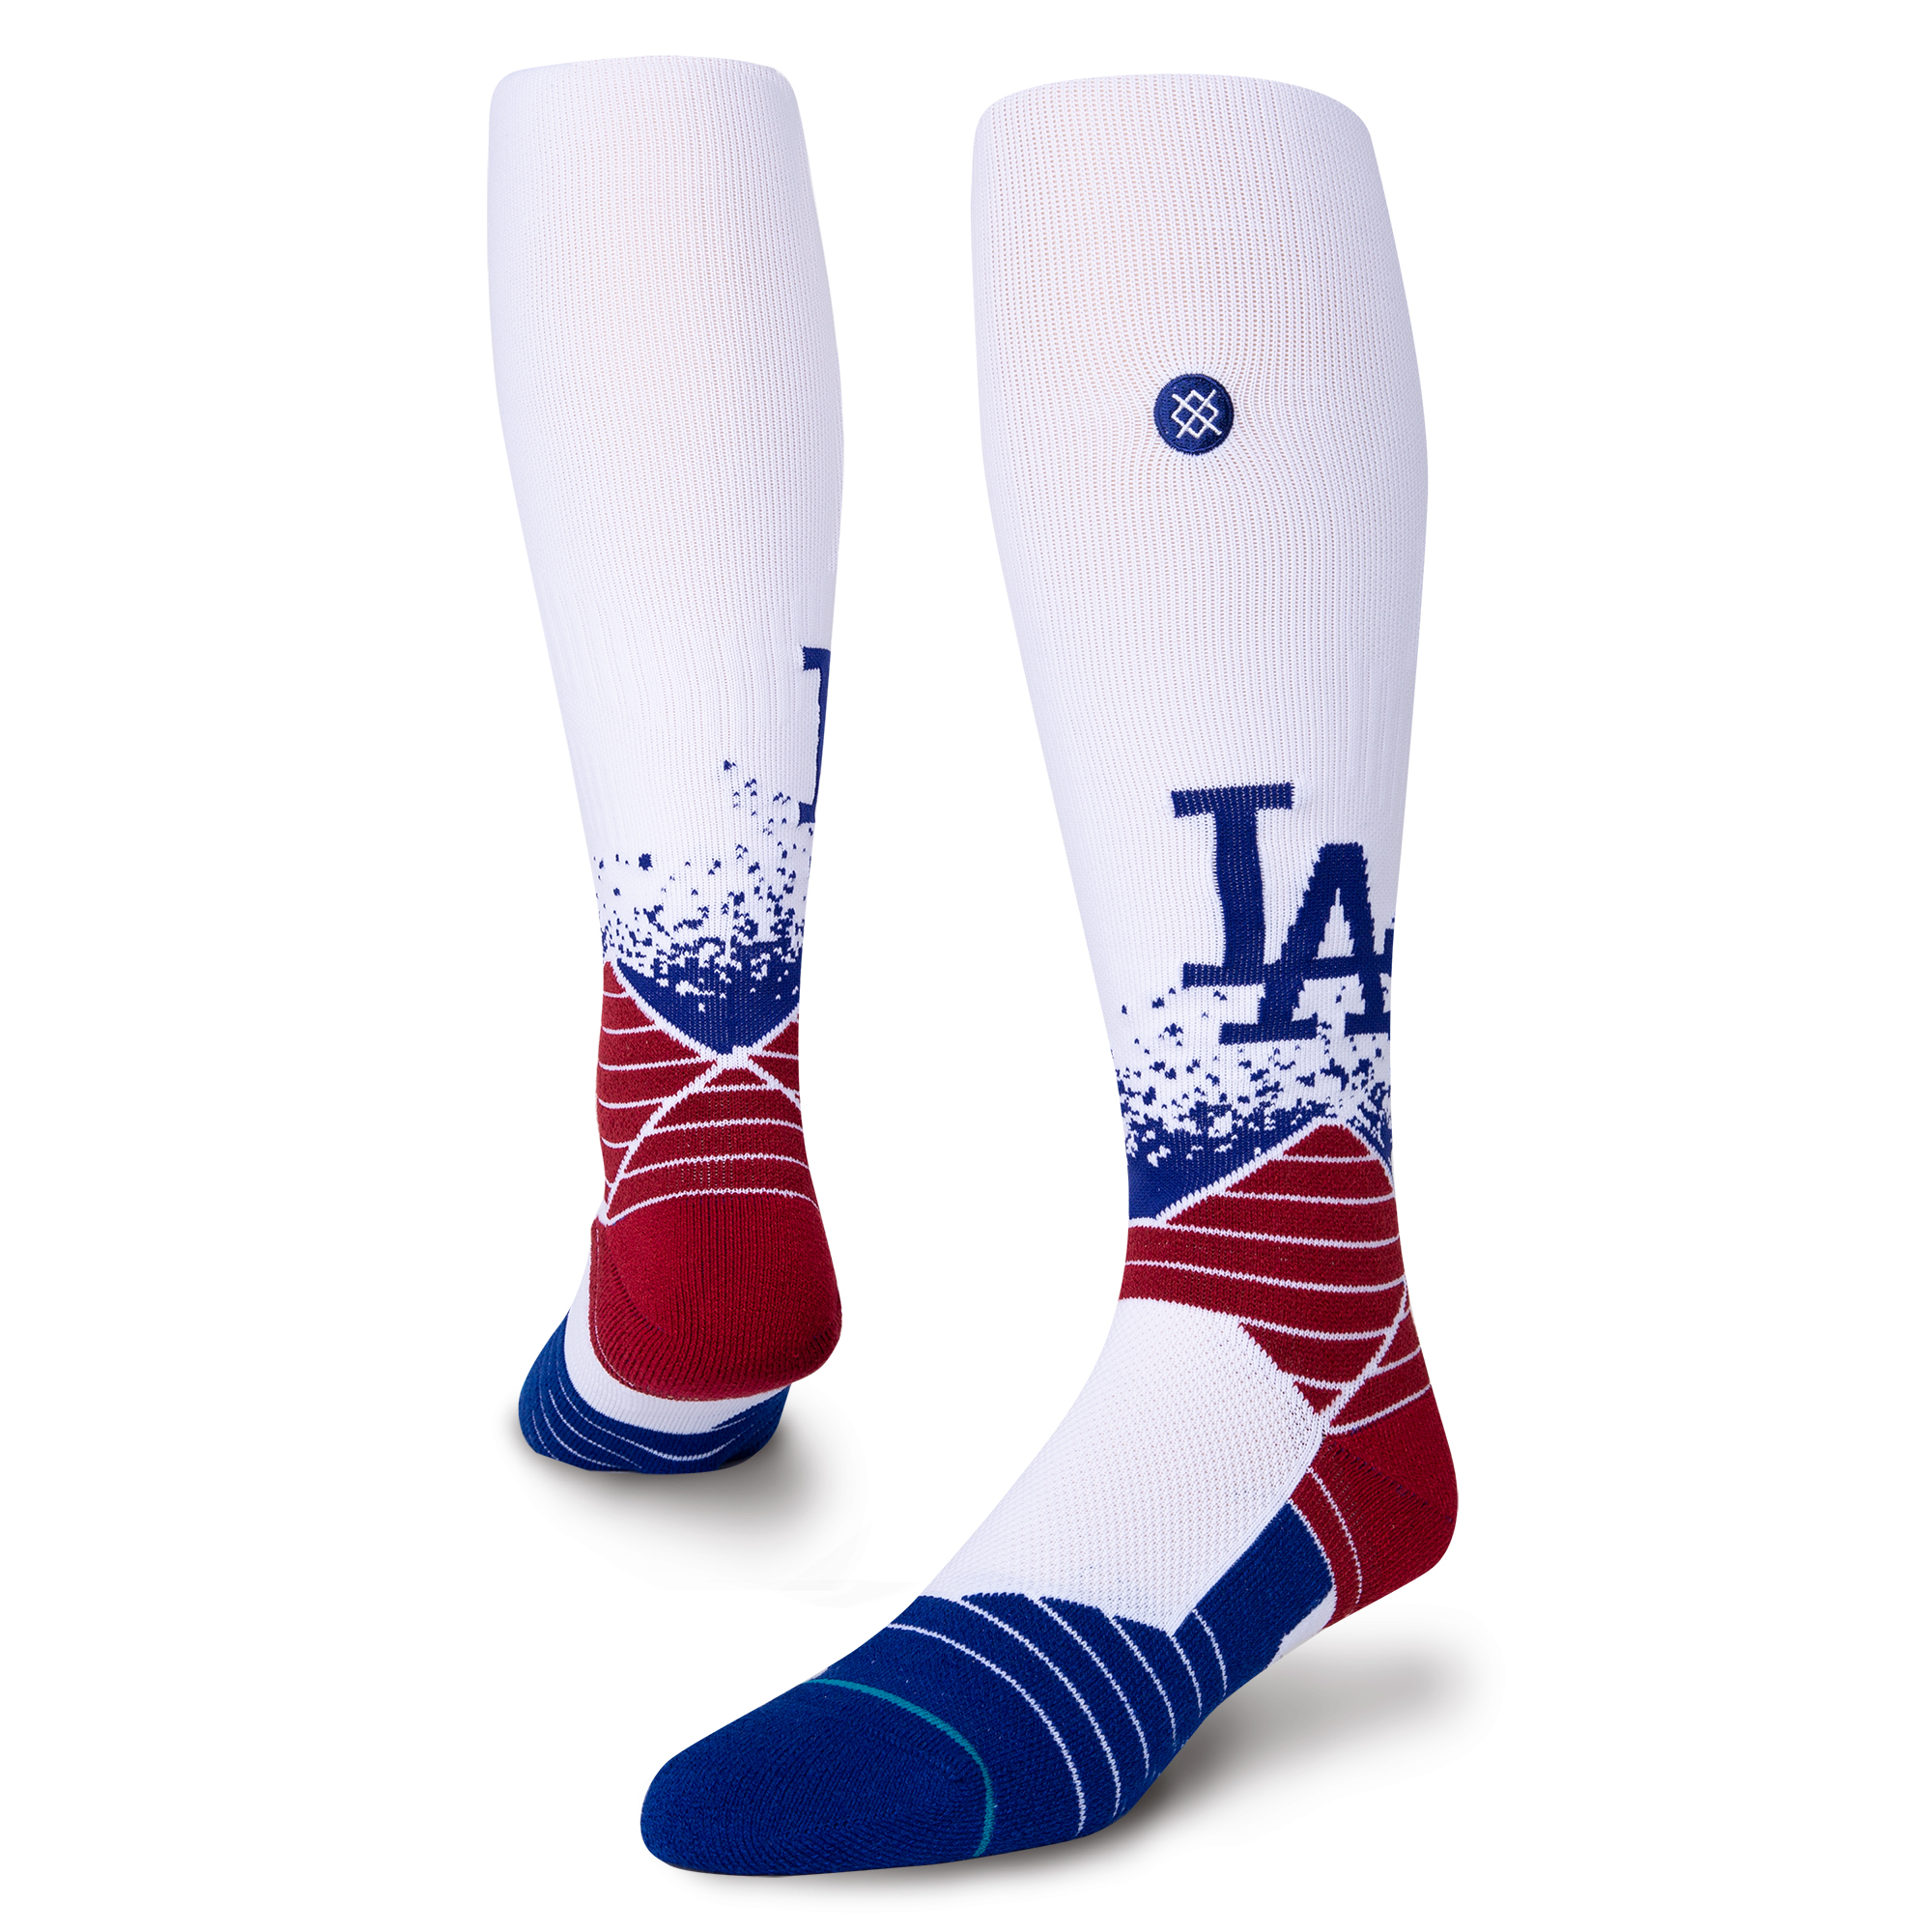 Official MLB Socks, Baseball Collection, MLB Socks Gear